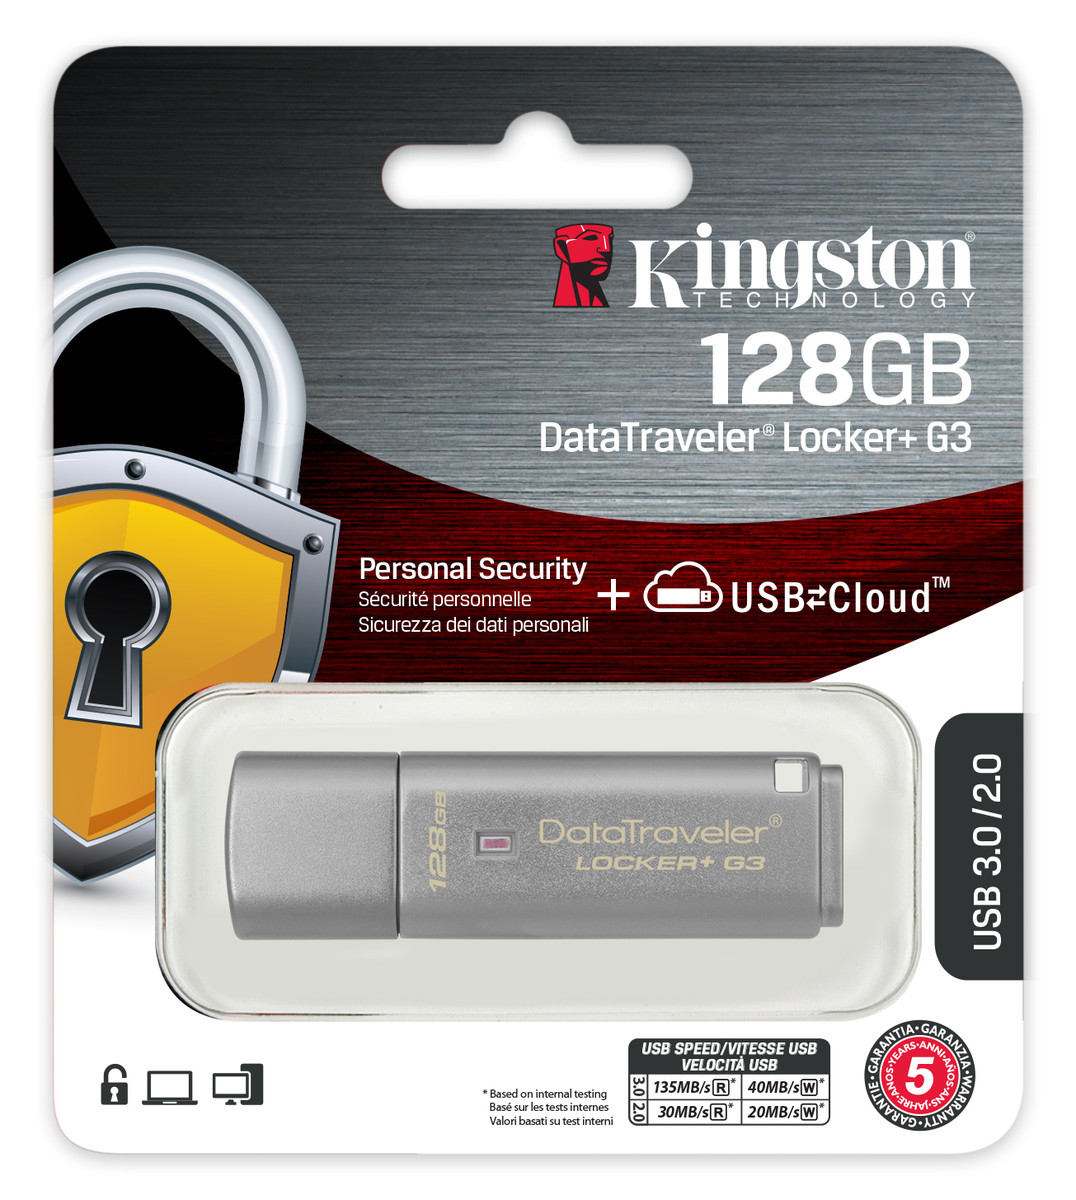 Kingston DataTraveler Locker+ G3 128GB Encrypted USB 3.0 (DTLPG3/128GB) - image 3 of 5